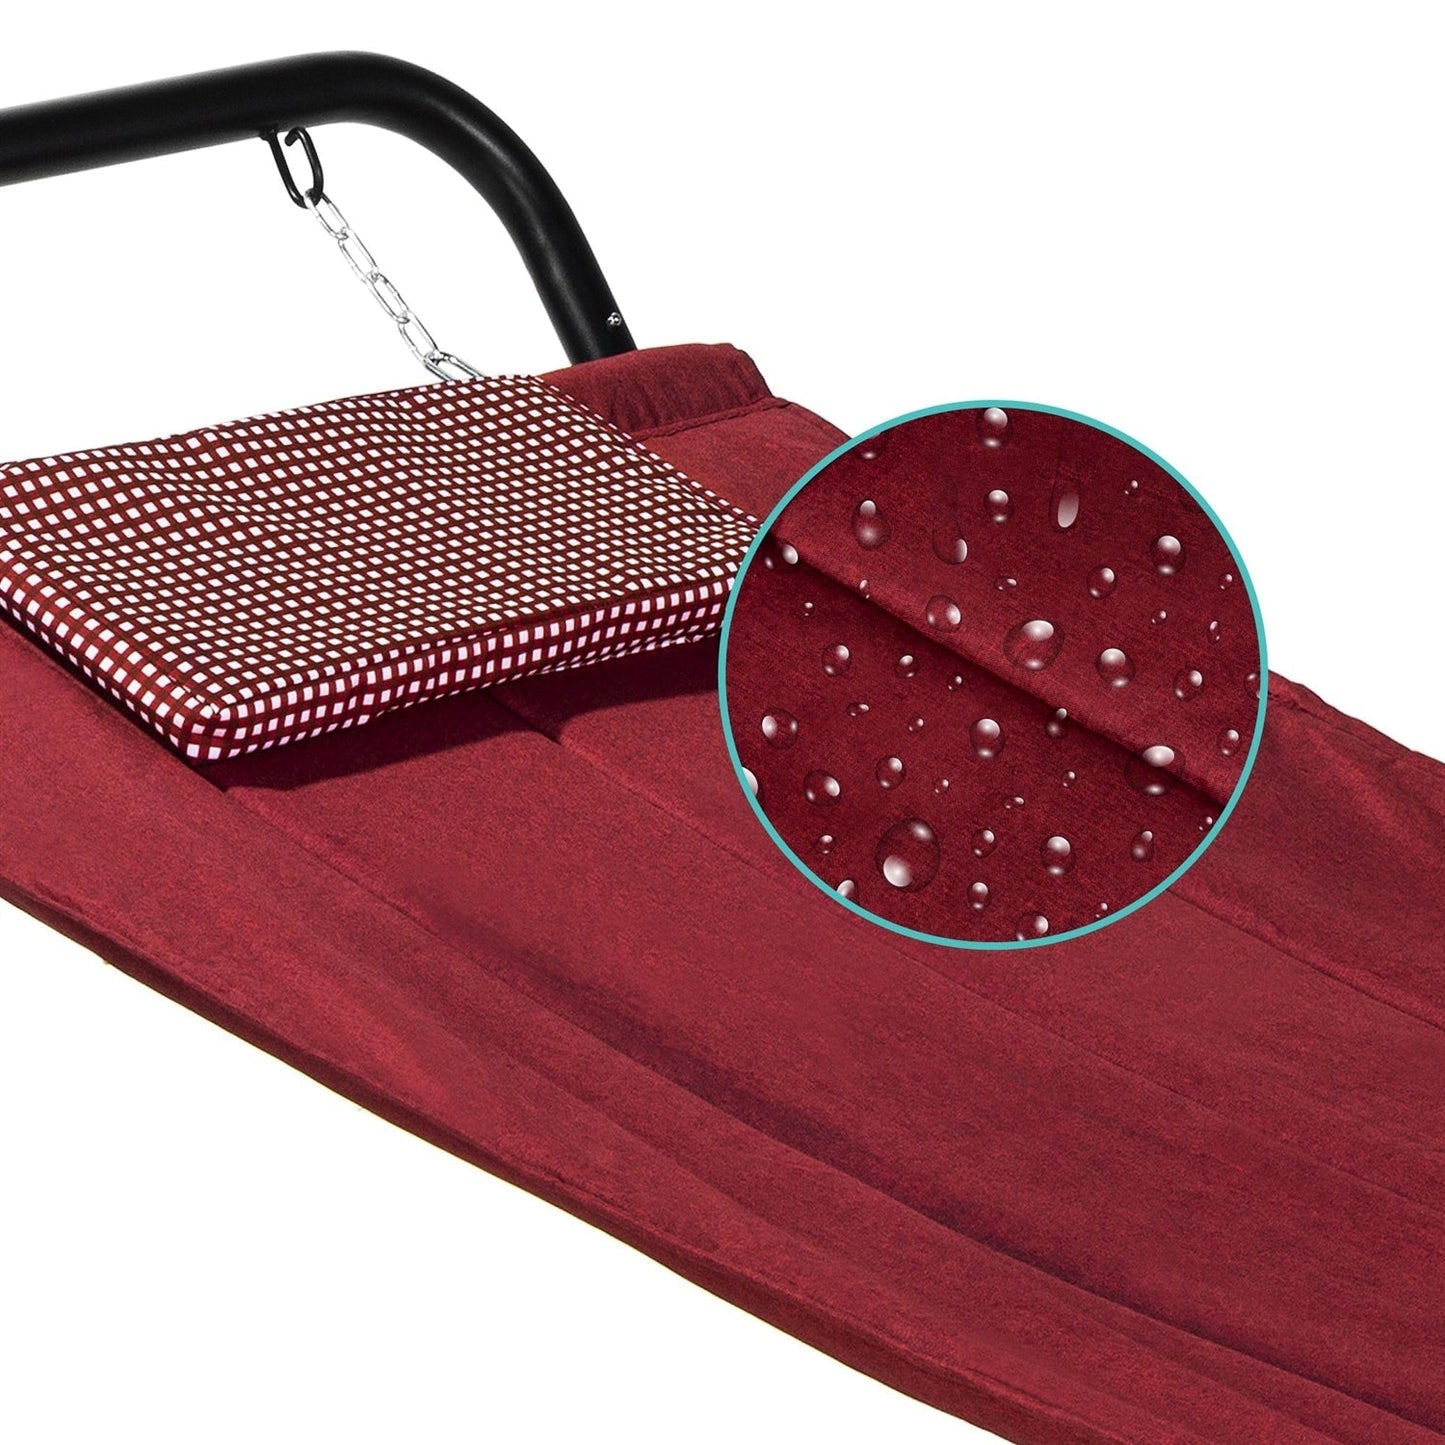 Outdoor > Outdoor Furniture > Hammocks - Red Waterproof Patio Hammock W/ Stand Pillow Storage Pockets